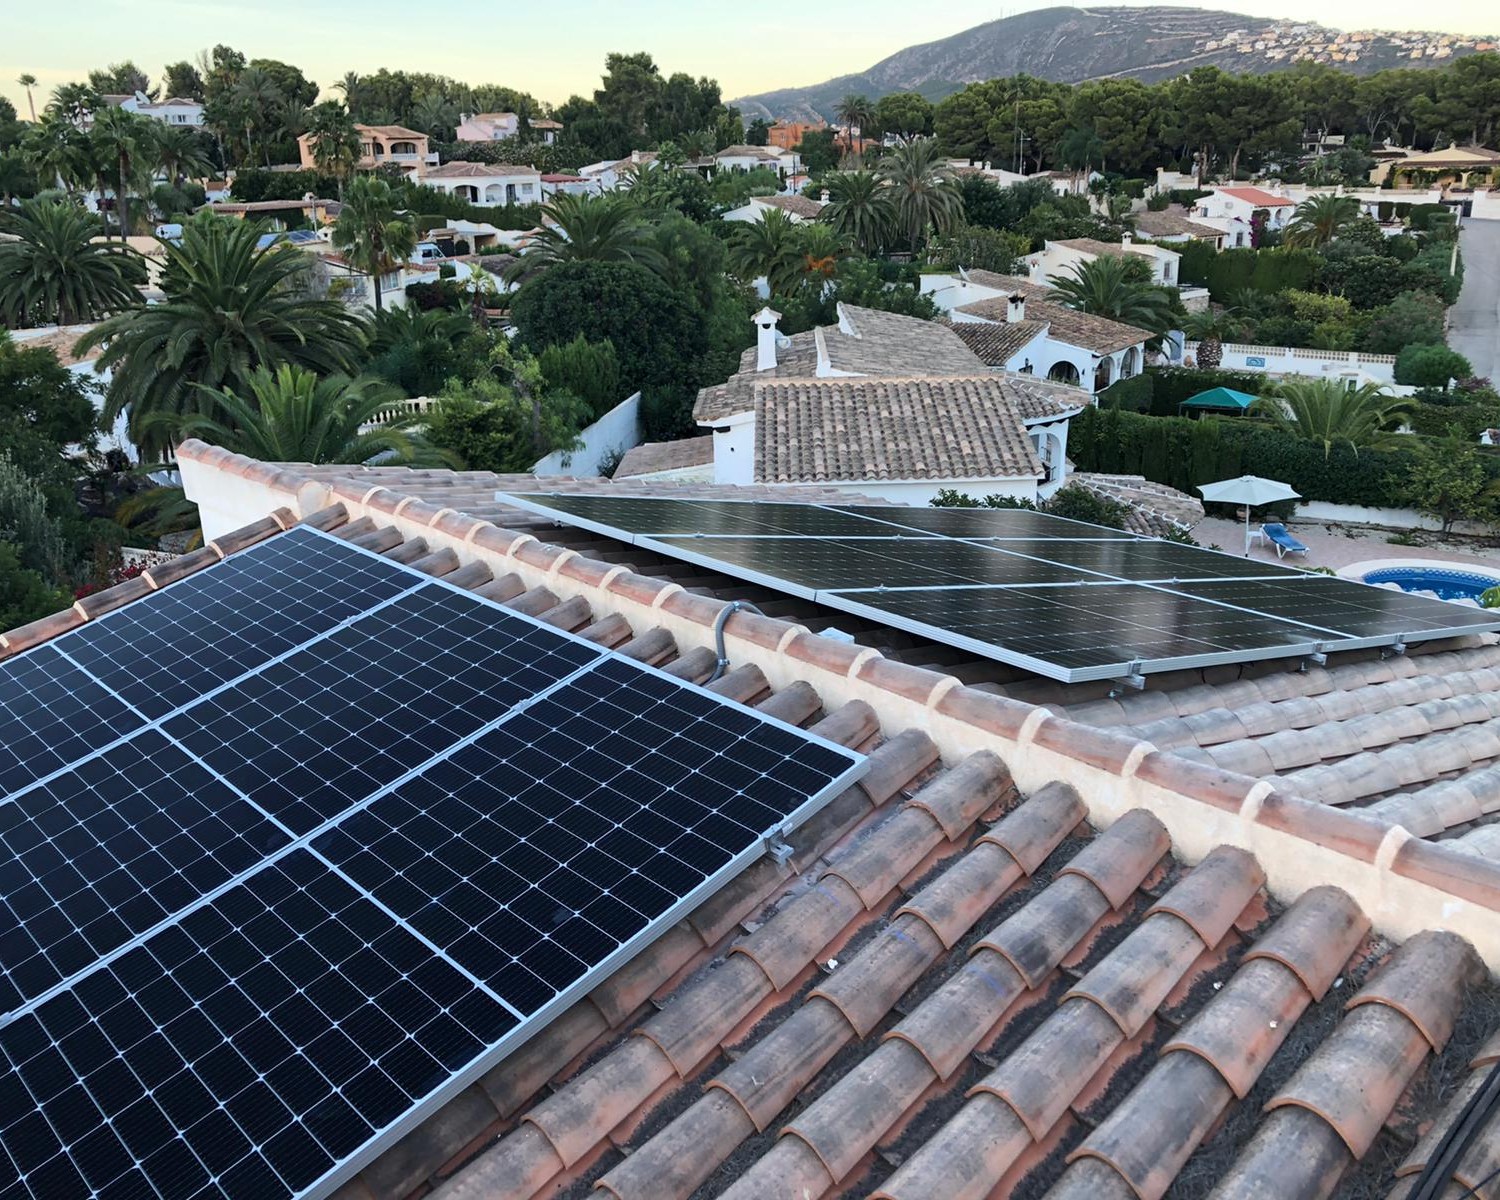 12X 455 wp Solar Panels, Bennisa, Alicante (Hybrid system)